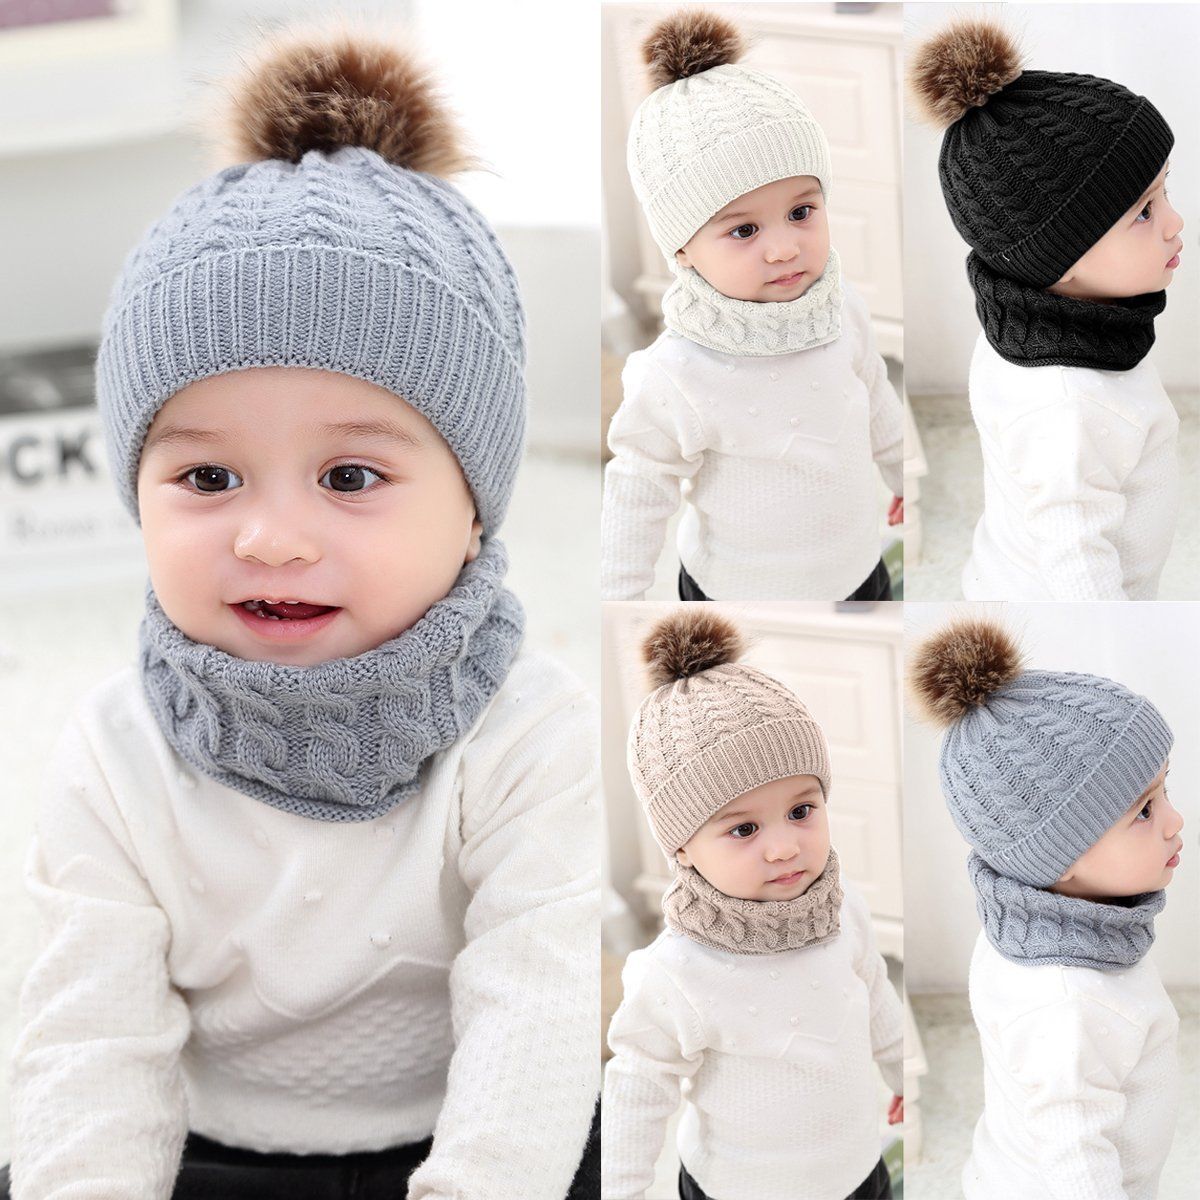 Toddler Kids Girl&Boy Baby Infant Winter Crochet Knit Hat Beanie Cap Scarf Set - image 1 of 5